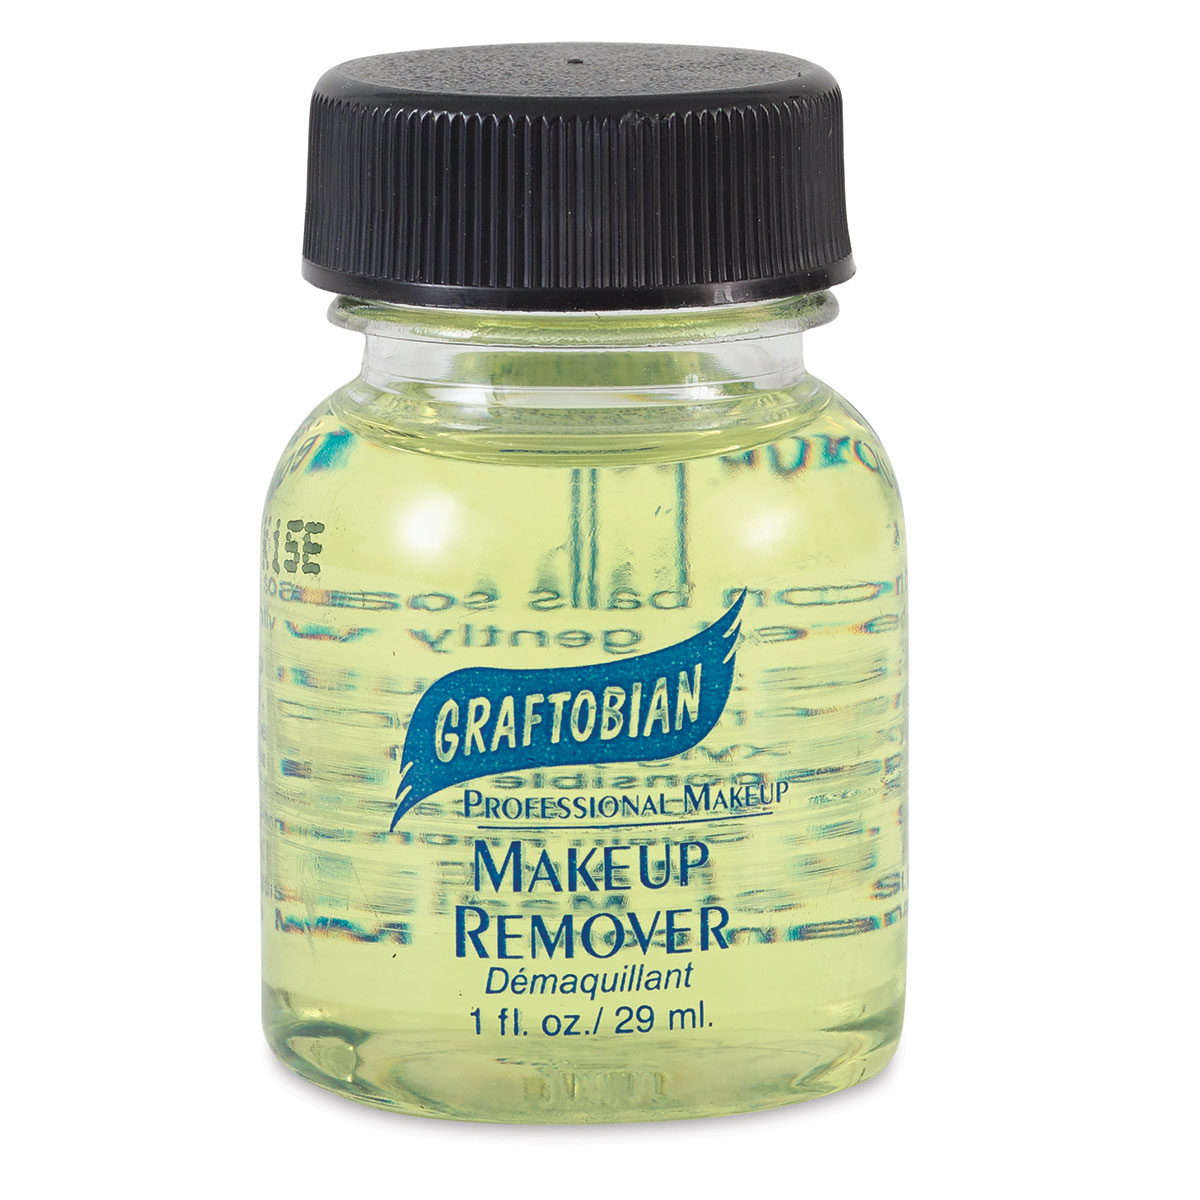 Graftobian Spirit Gum and Remover